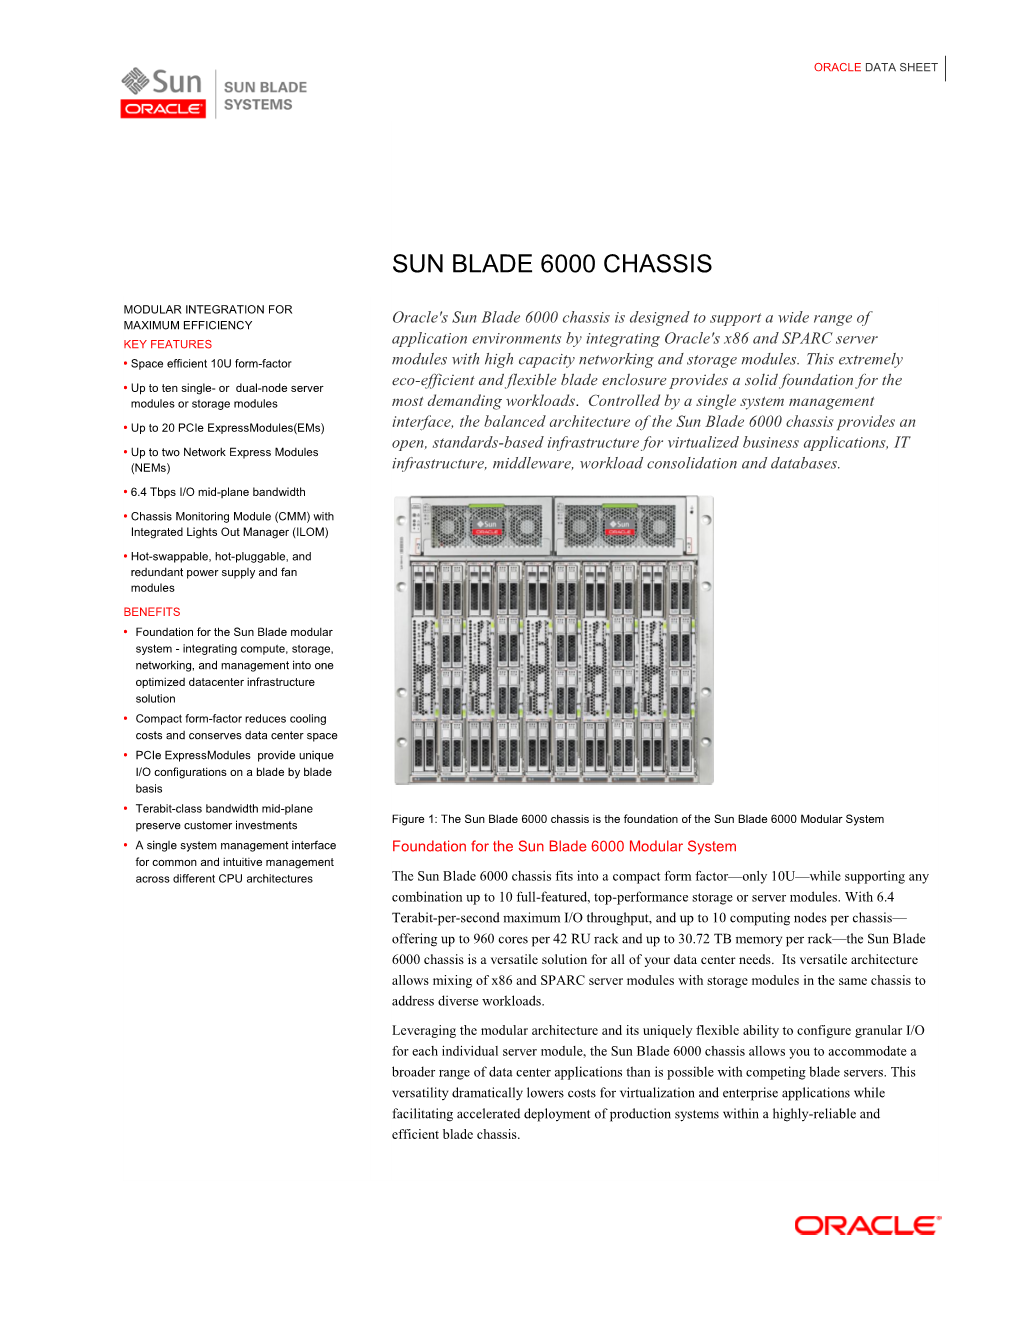 Sun Blade 6000 Chassis Data Sheet